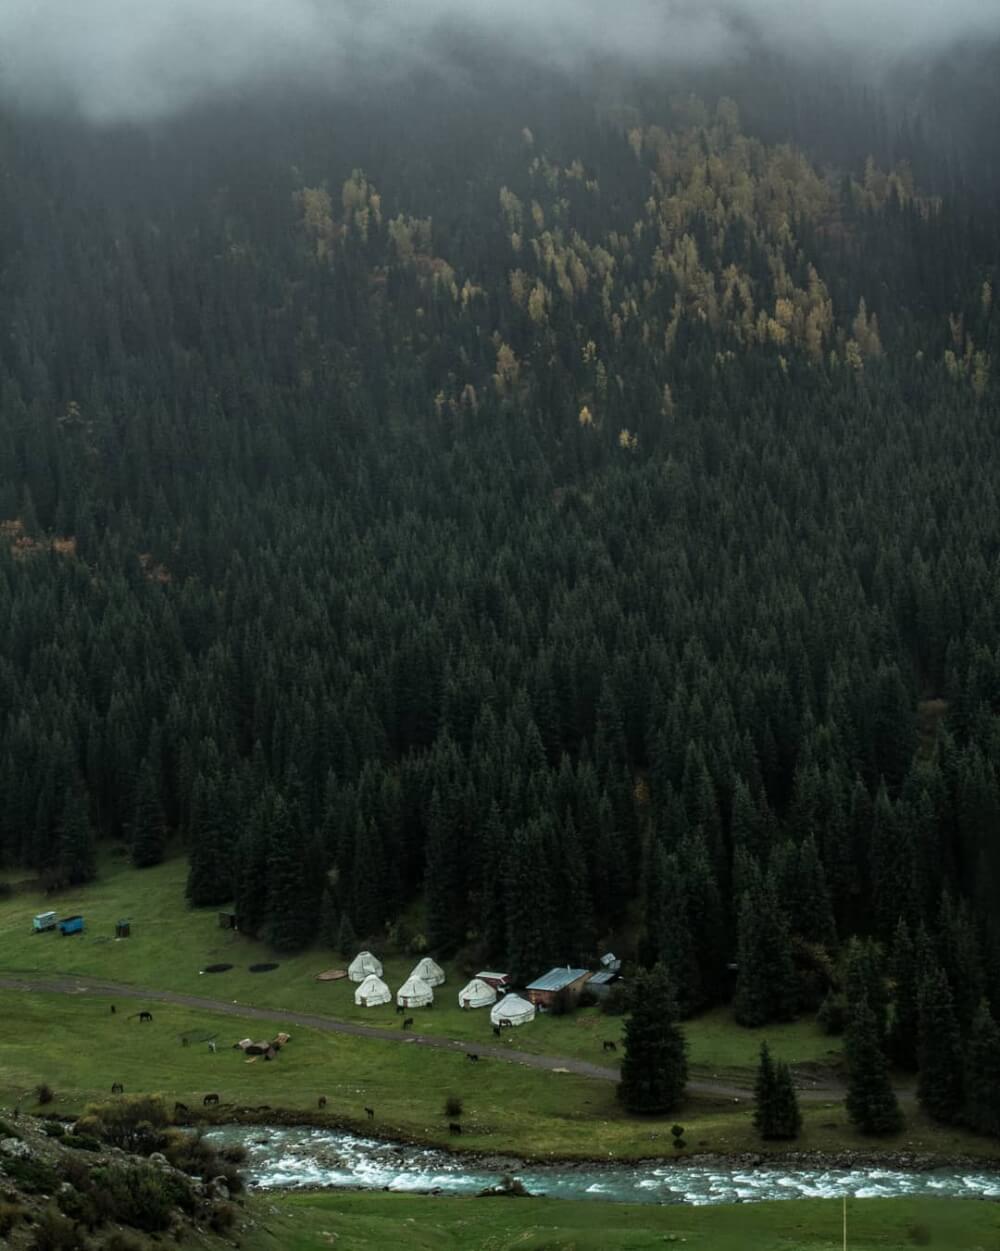 Yurt camping in Kyrgyzstan, Jeti oguz